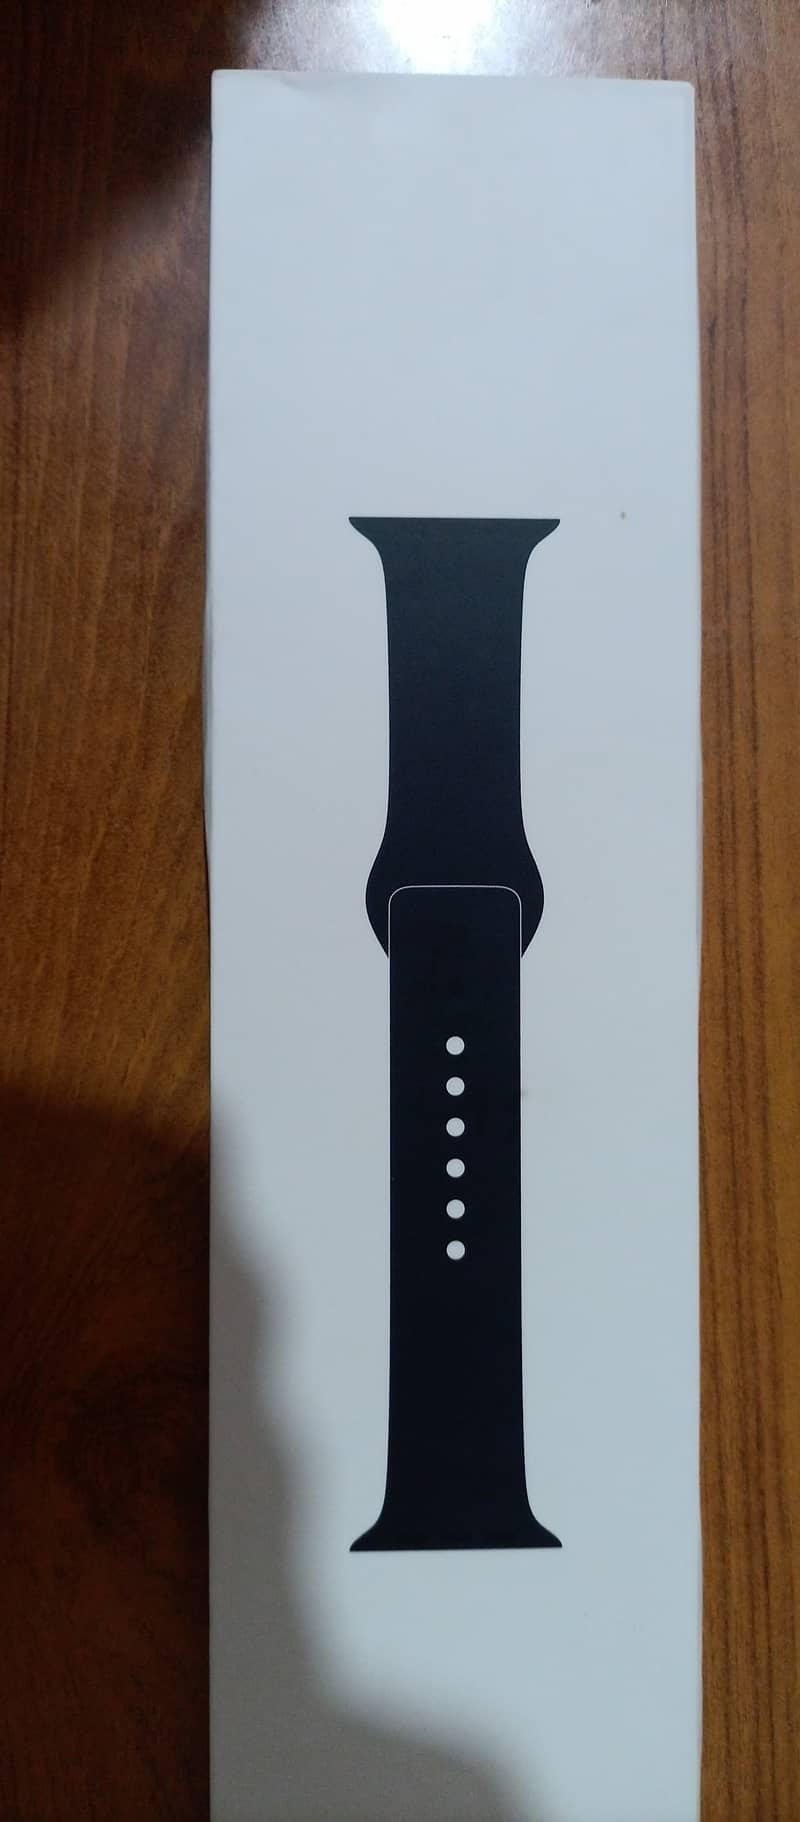 Apple Watch Series 5 1